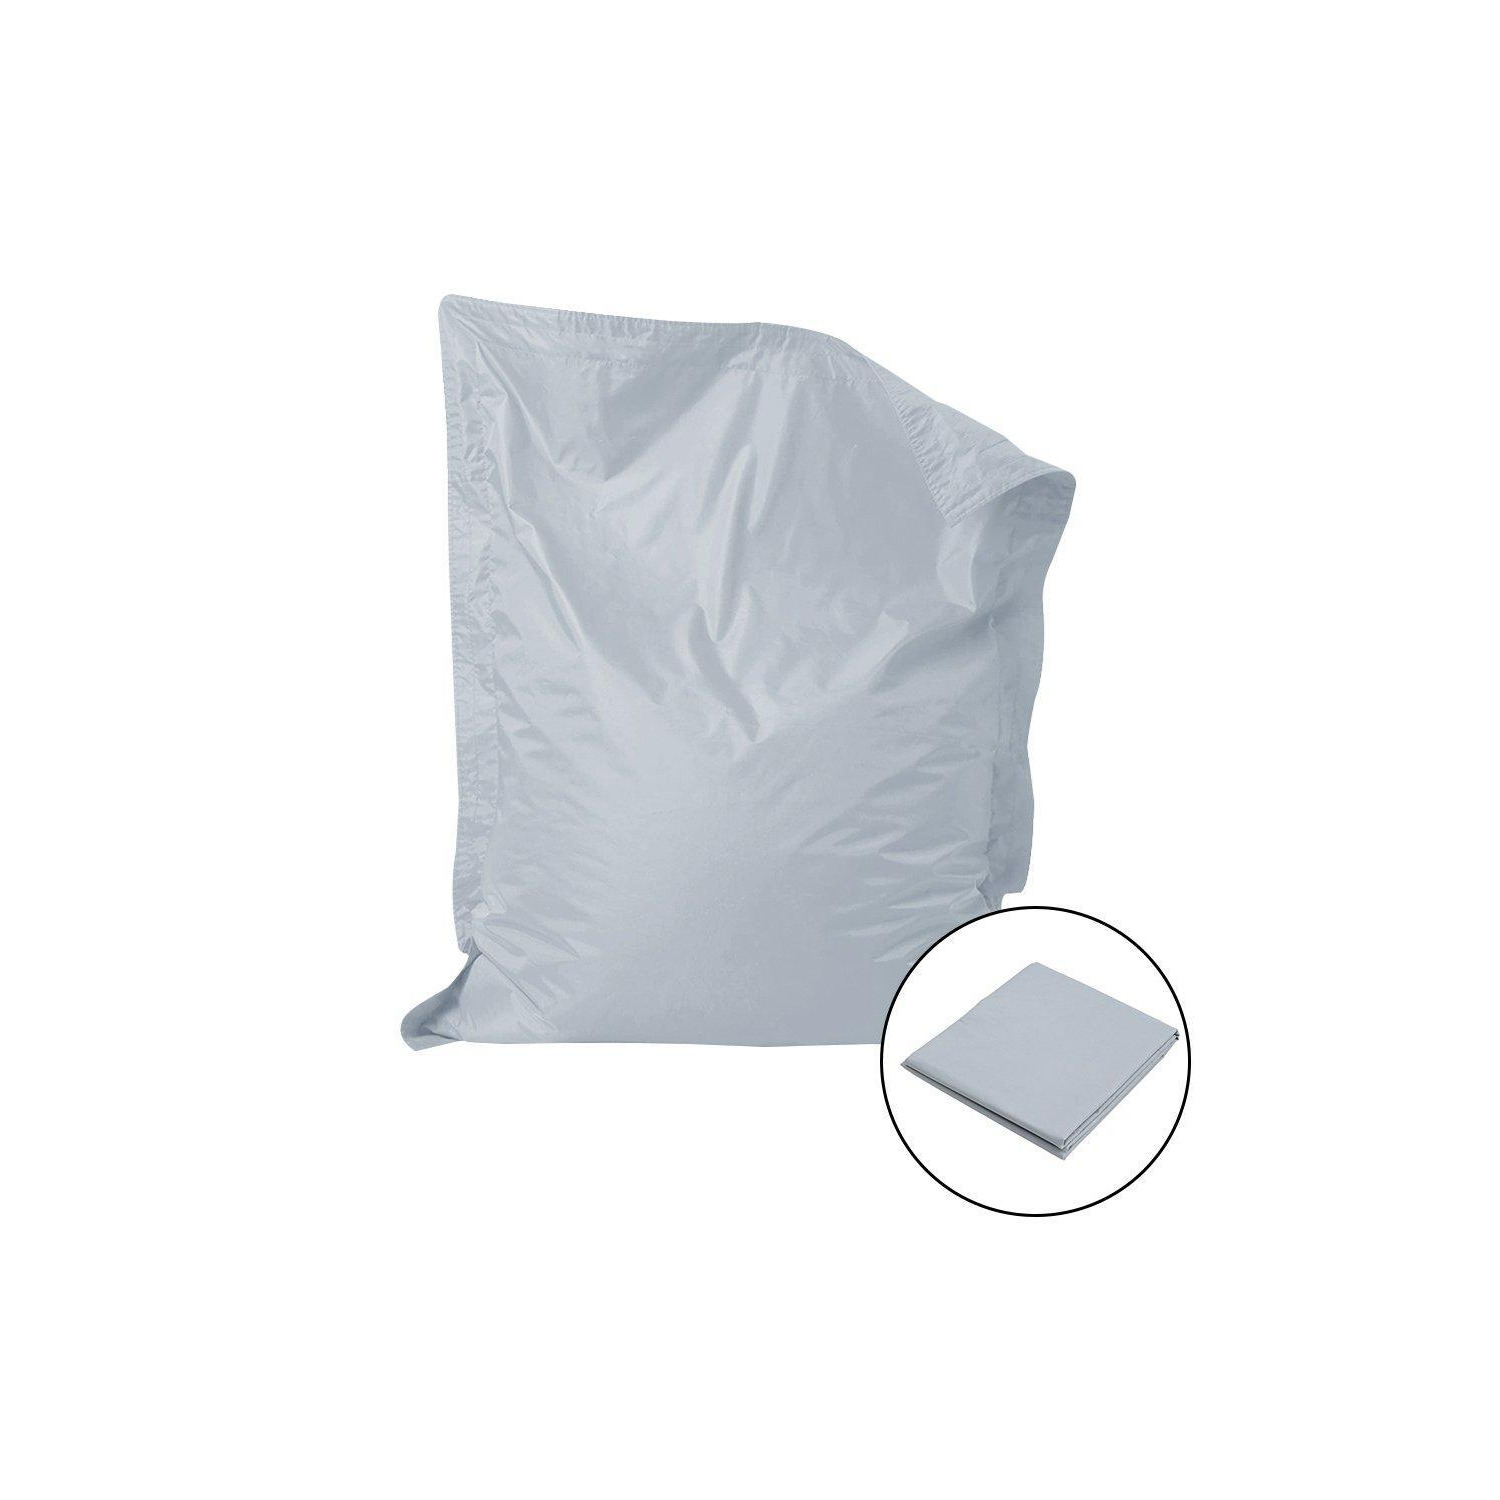 180x140cm Large Waterproof Bean Bag Oxford Seat Cushion Cover - image 1